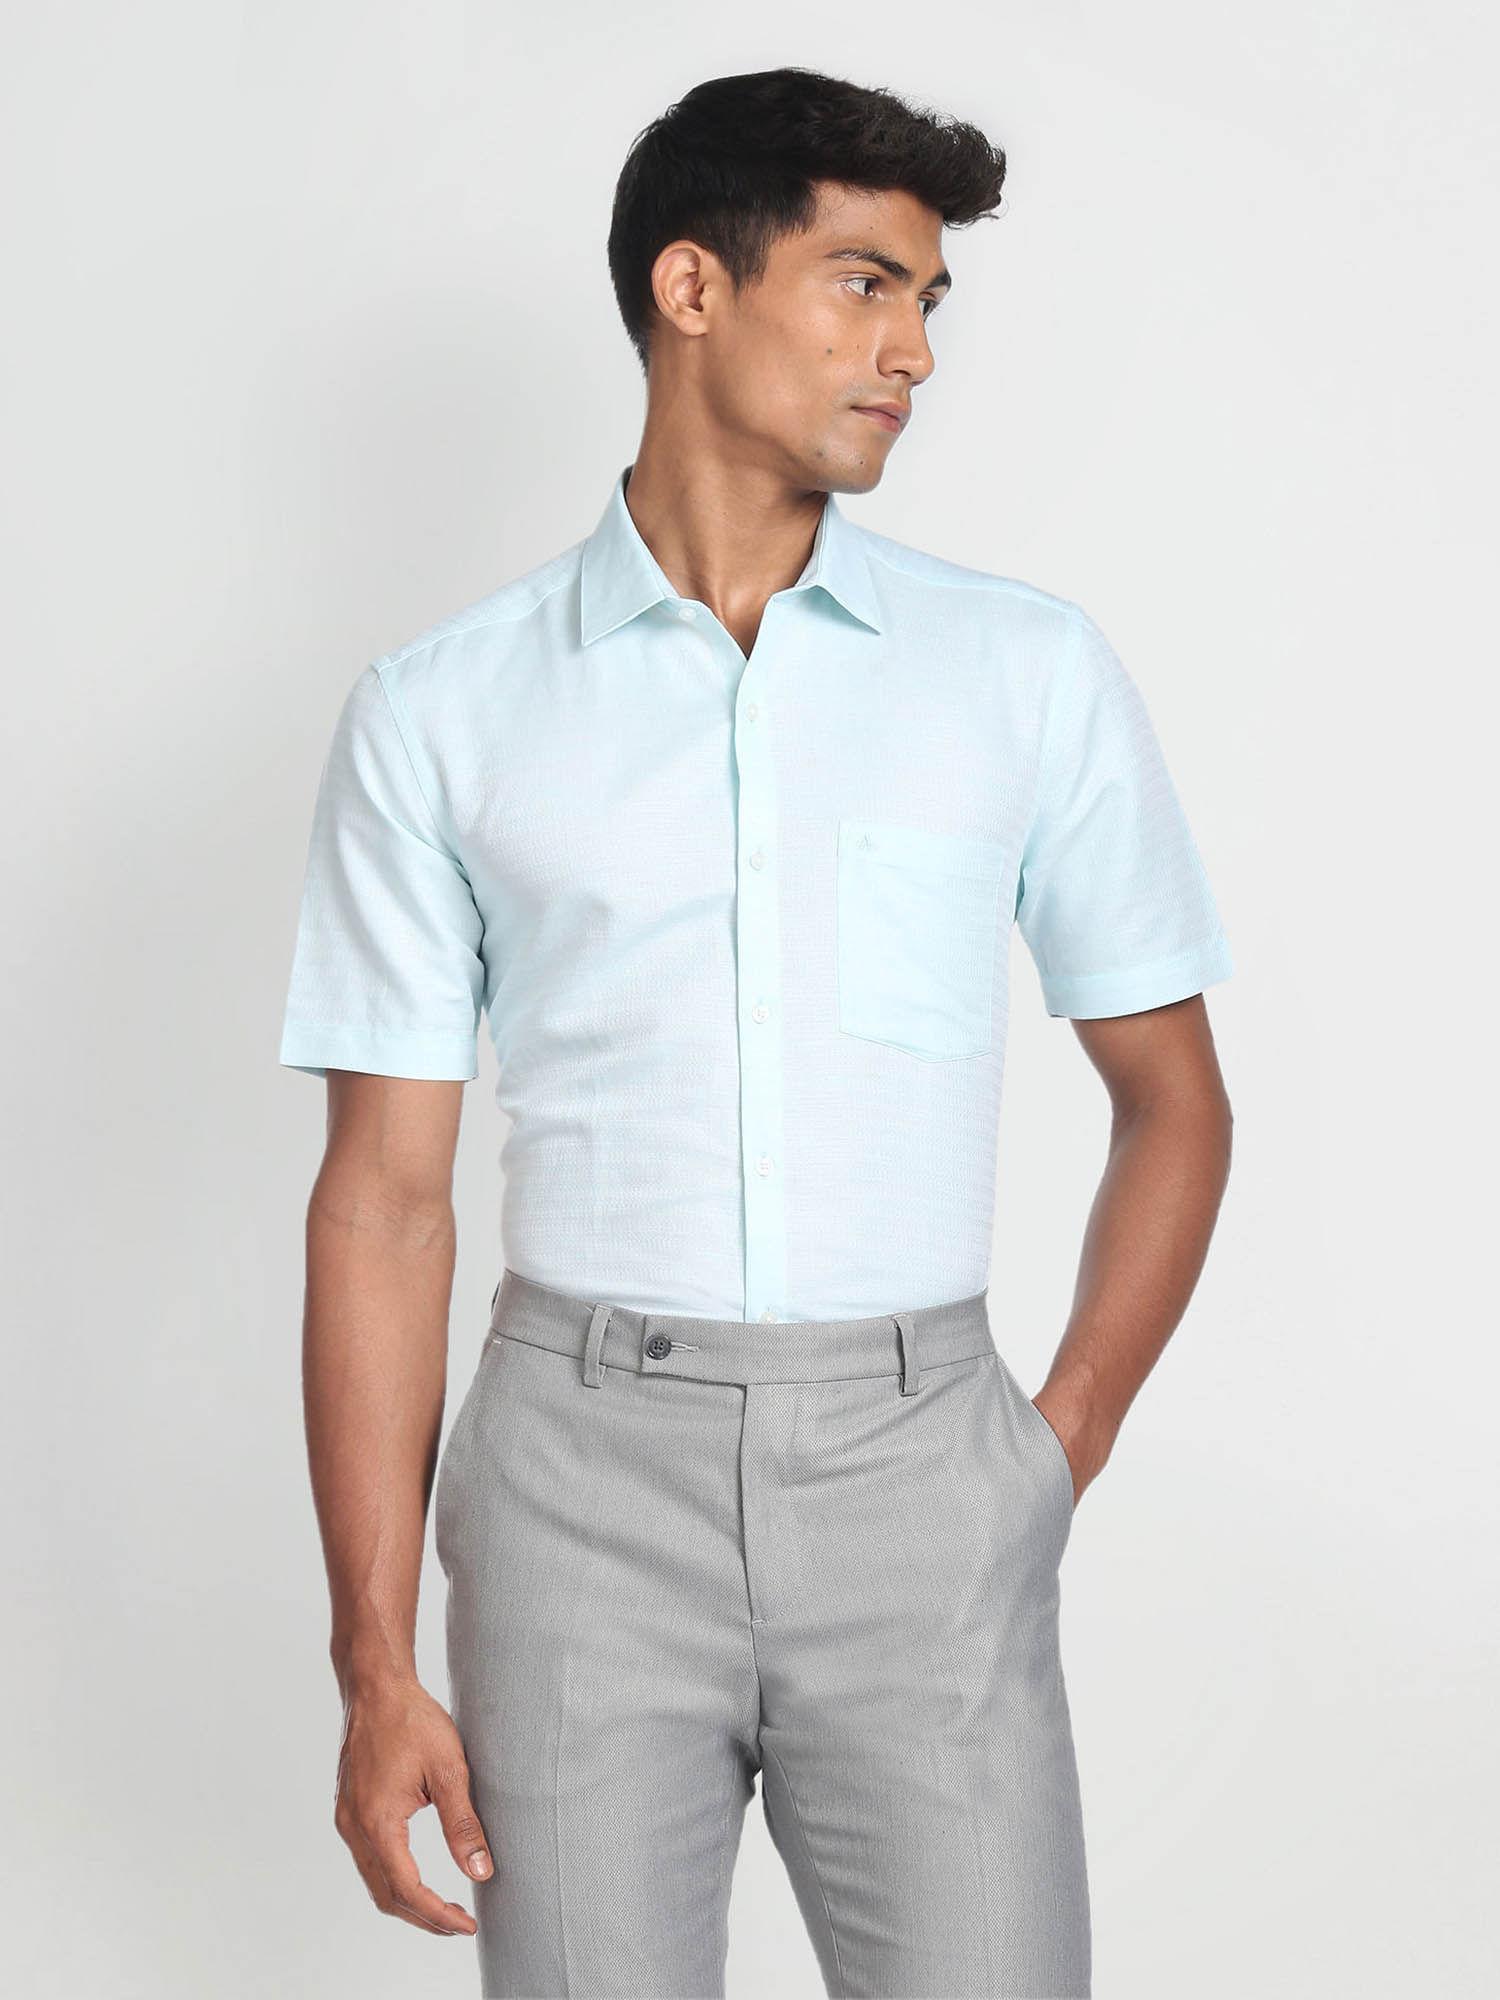 geometric dobby formal shirt